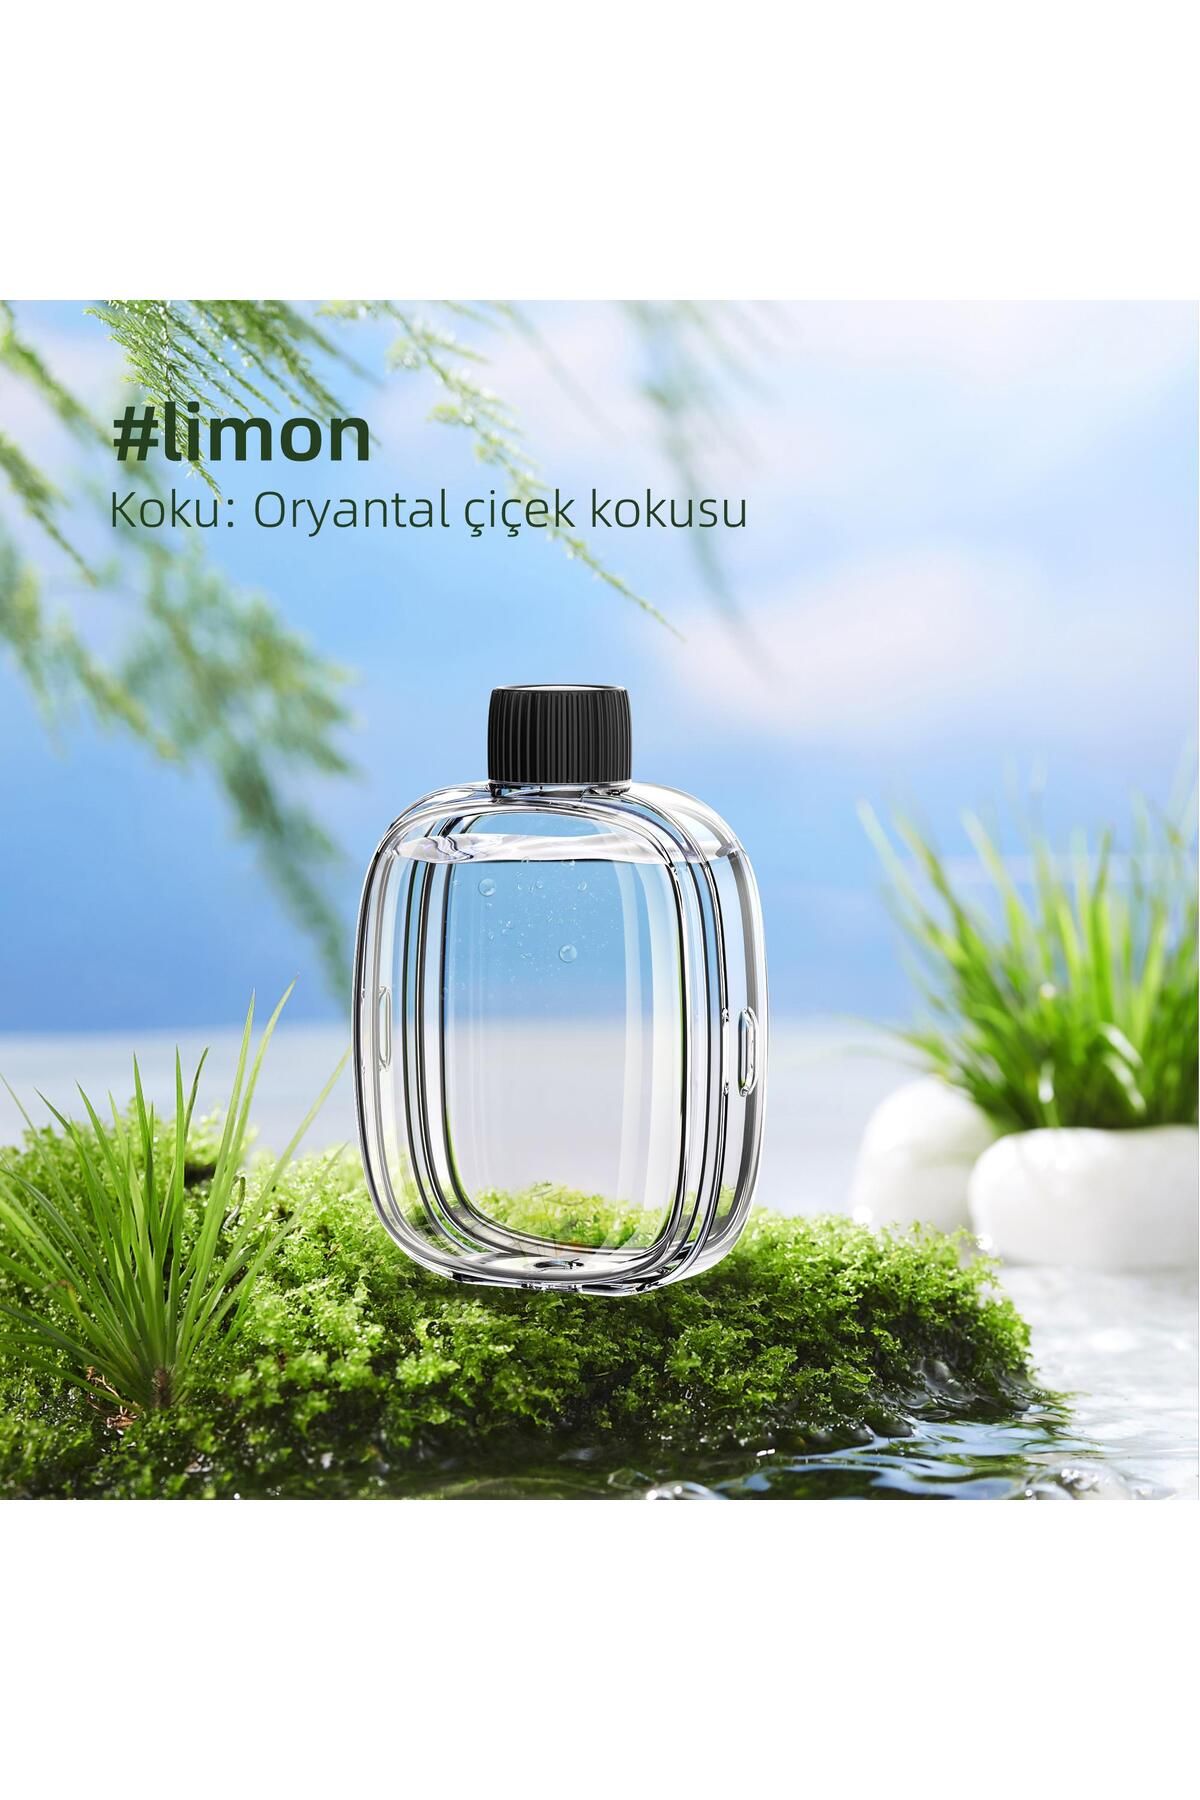 Mioji Mio Smell 2x Aromaterapi Yedek Oda Kokusu - Lemon Kokusu (1 ADET)